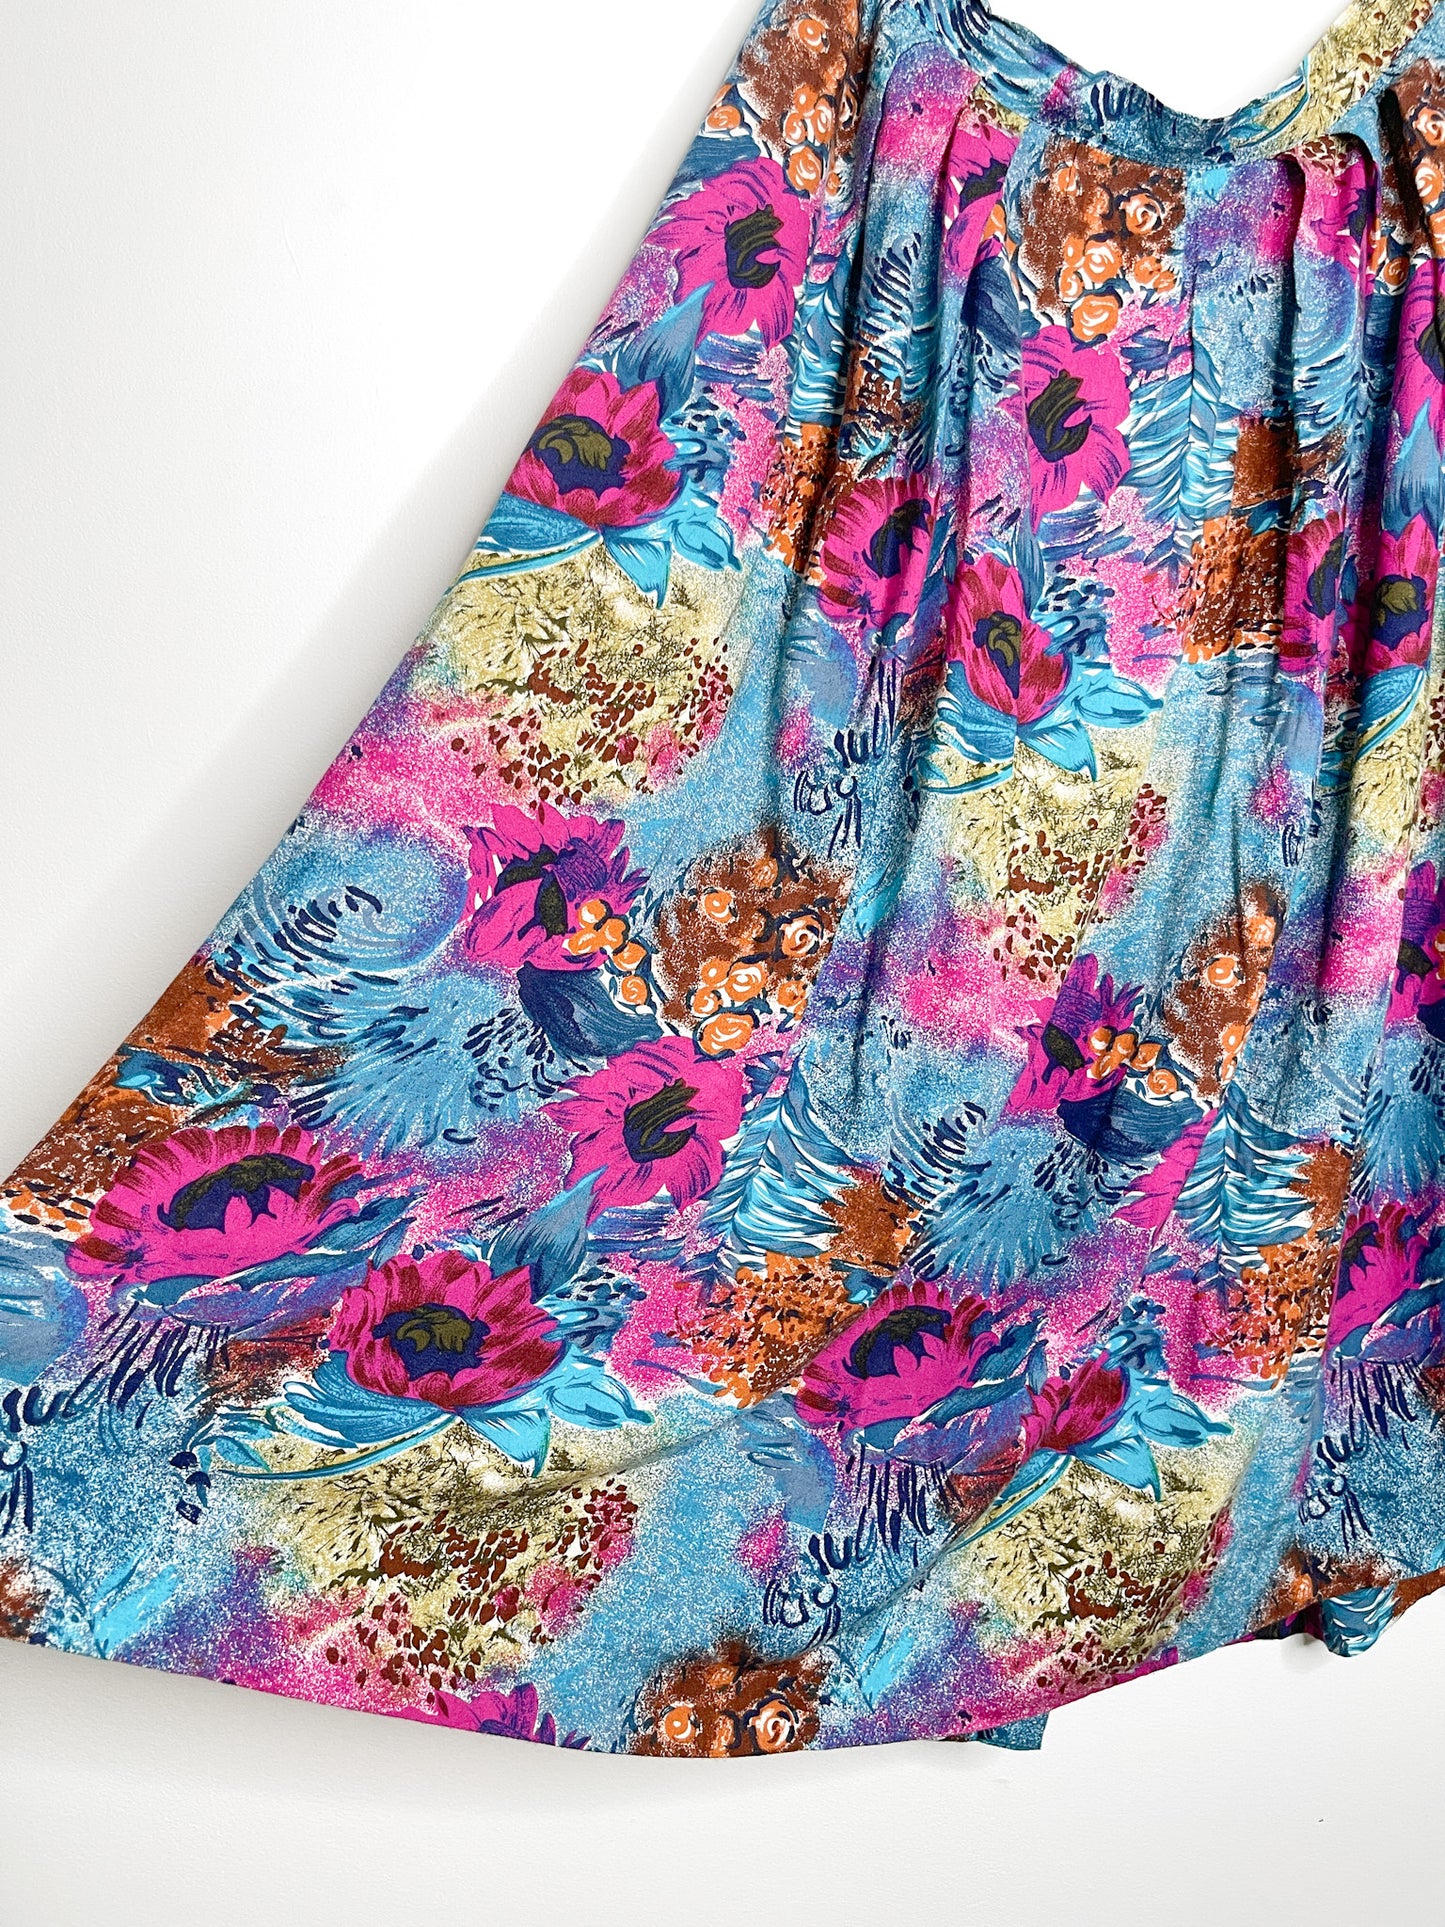 Vintage Floral Printed Skirt Size Large - XTRA Large | Floral A-Line Skirt | Button Front Skirt